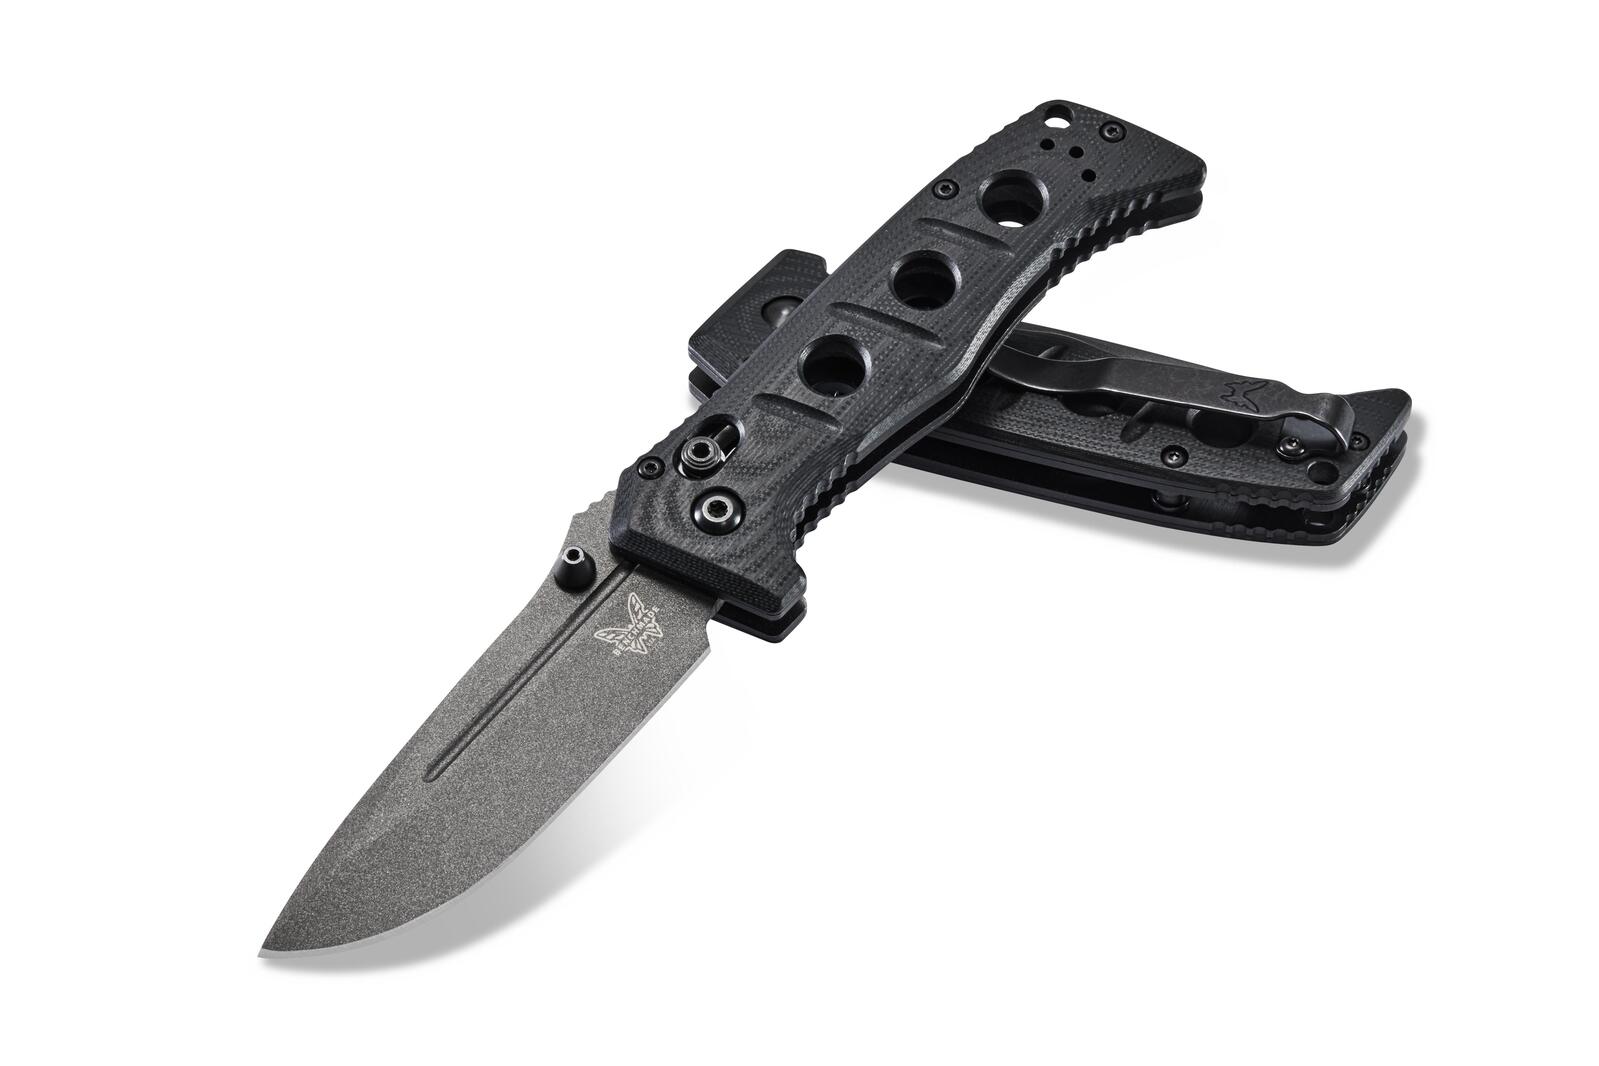 Benchmade 273GY-1 Mini Adamas Axis Folding Knife - Black - Wander Outdoors